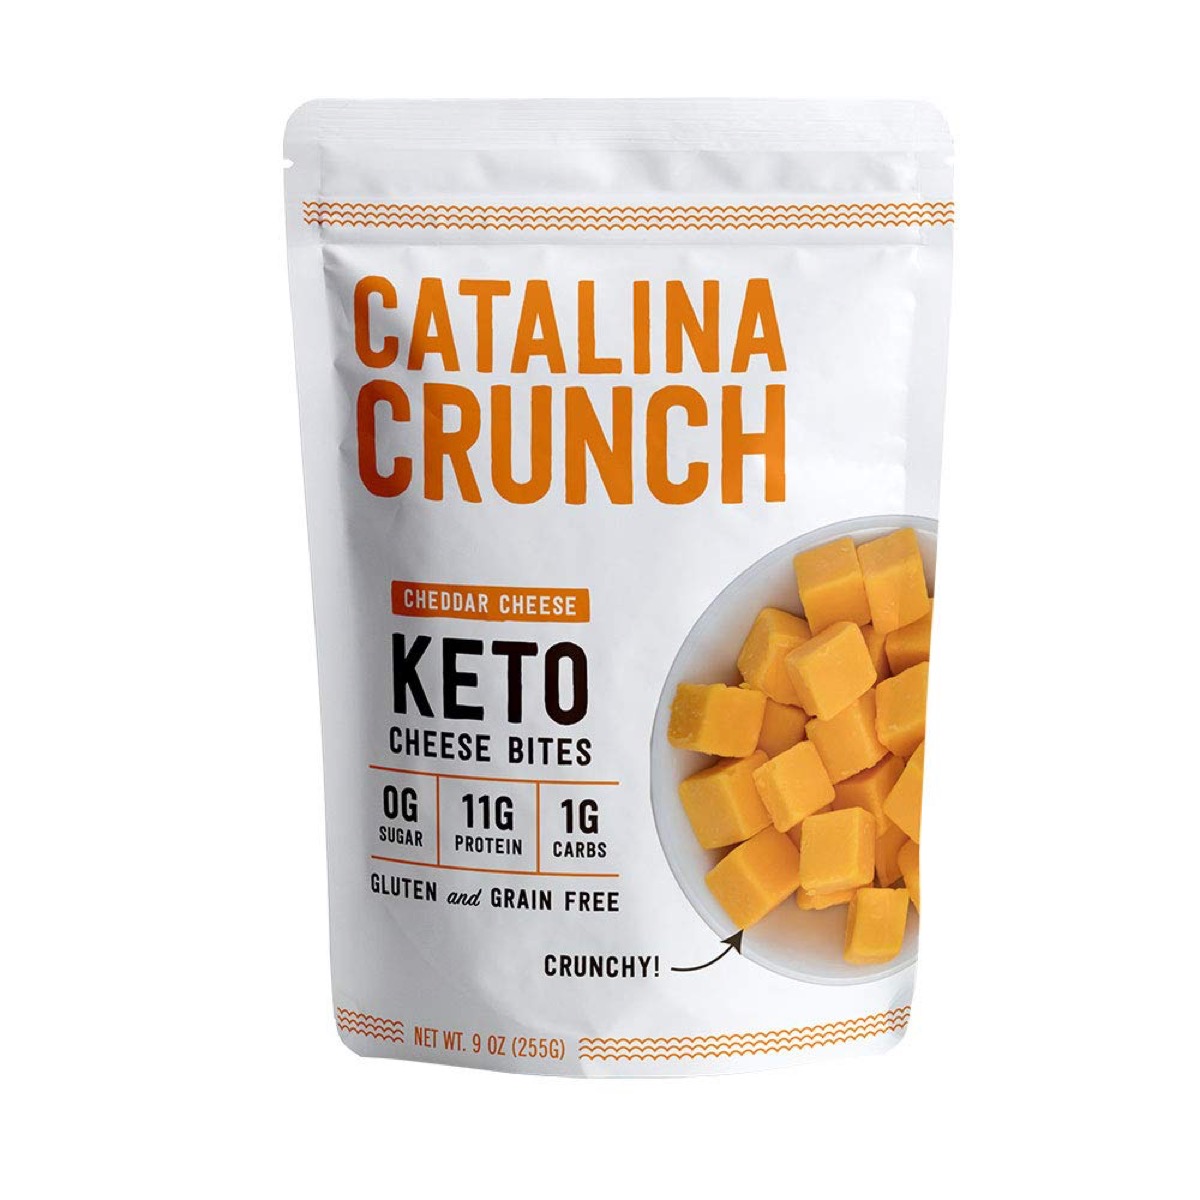 catalina crunch cheddar cheese keto cheese bites, gluten-free snacks